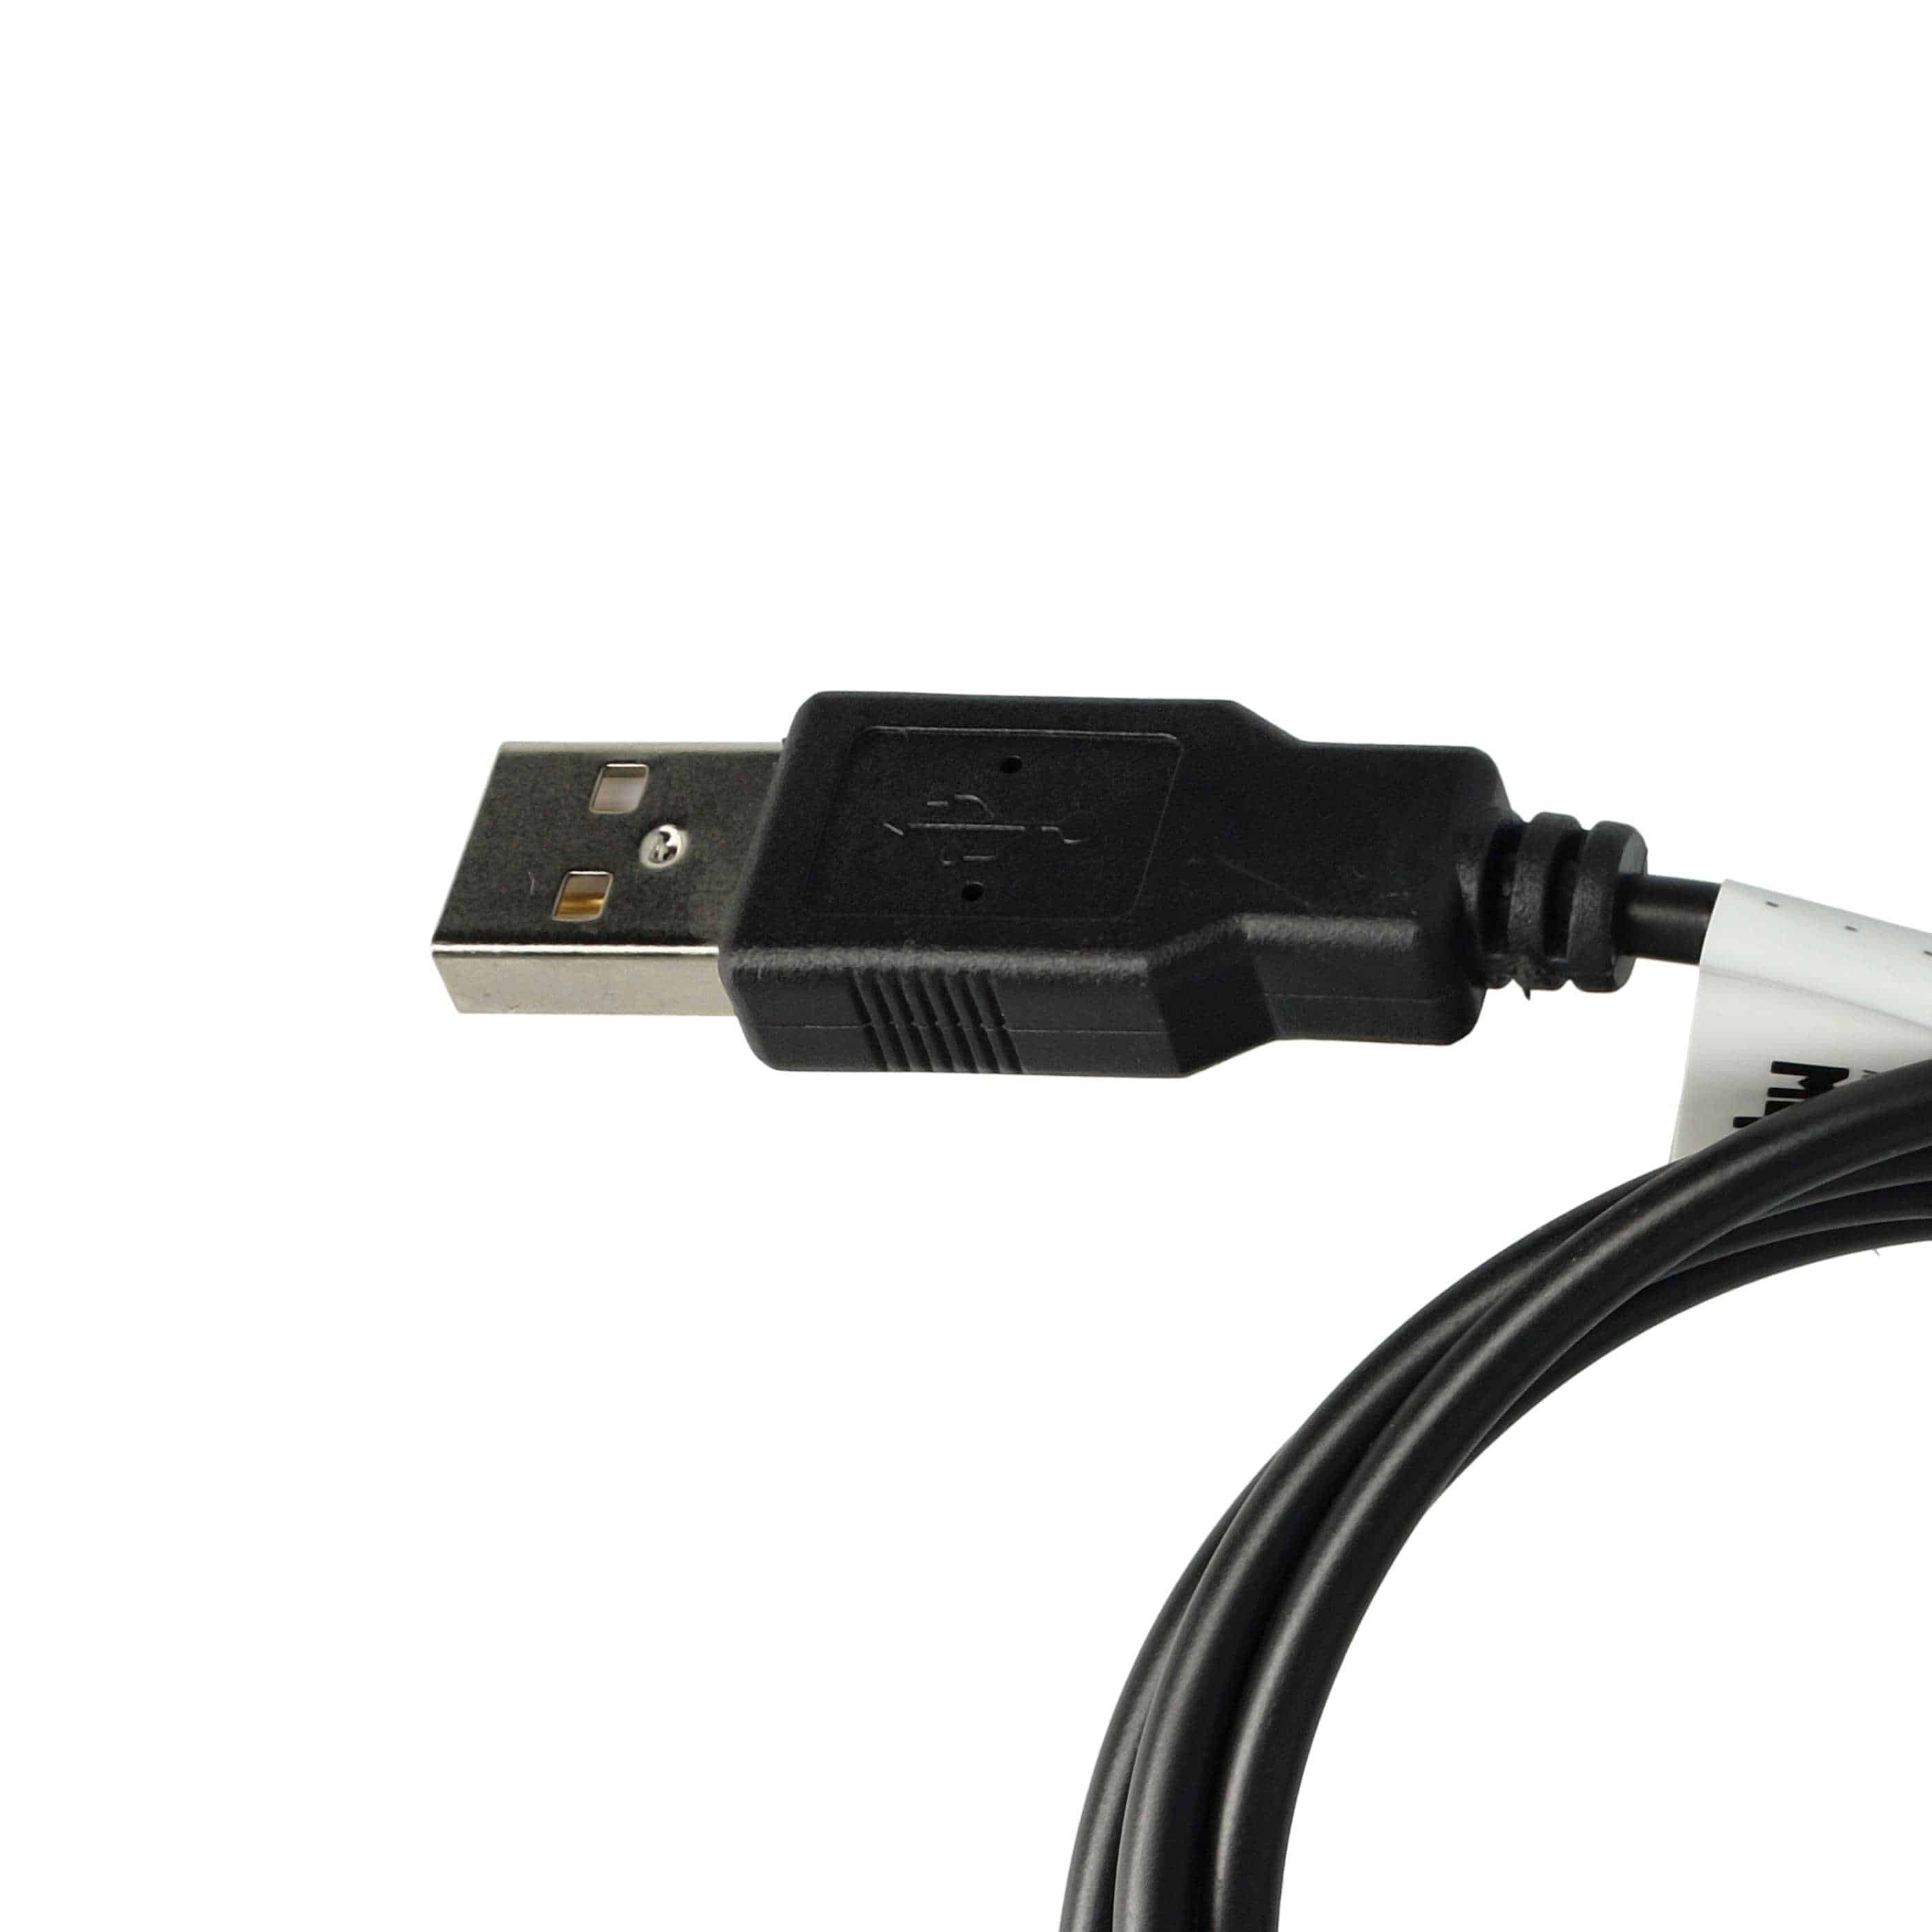 USB Datenkabel passend für Cect Kamera u.a. - 100 cm